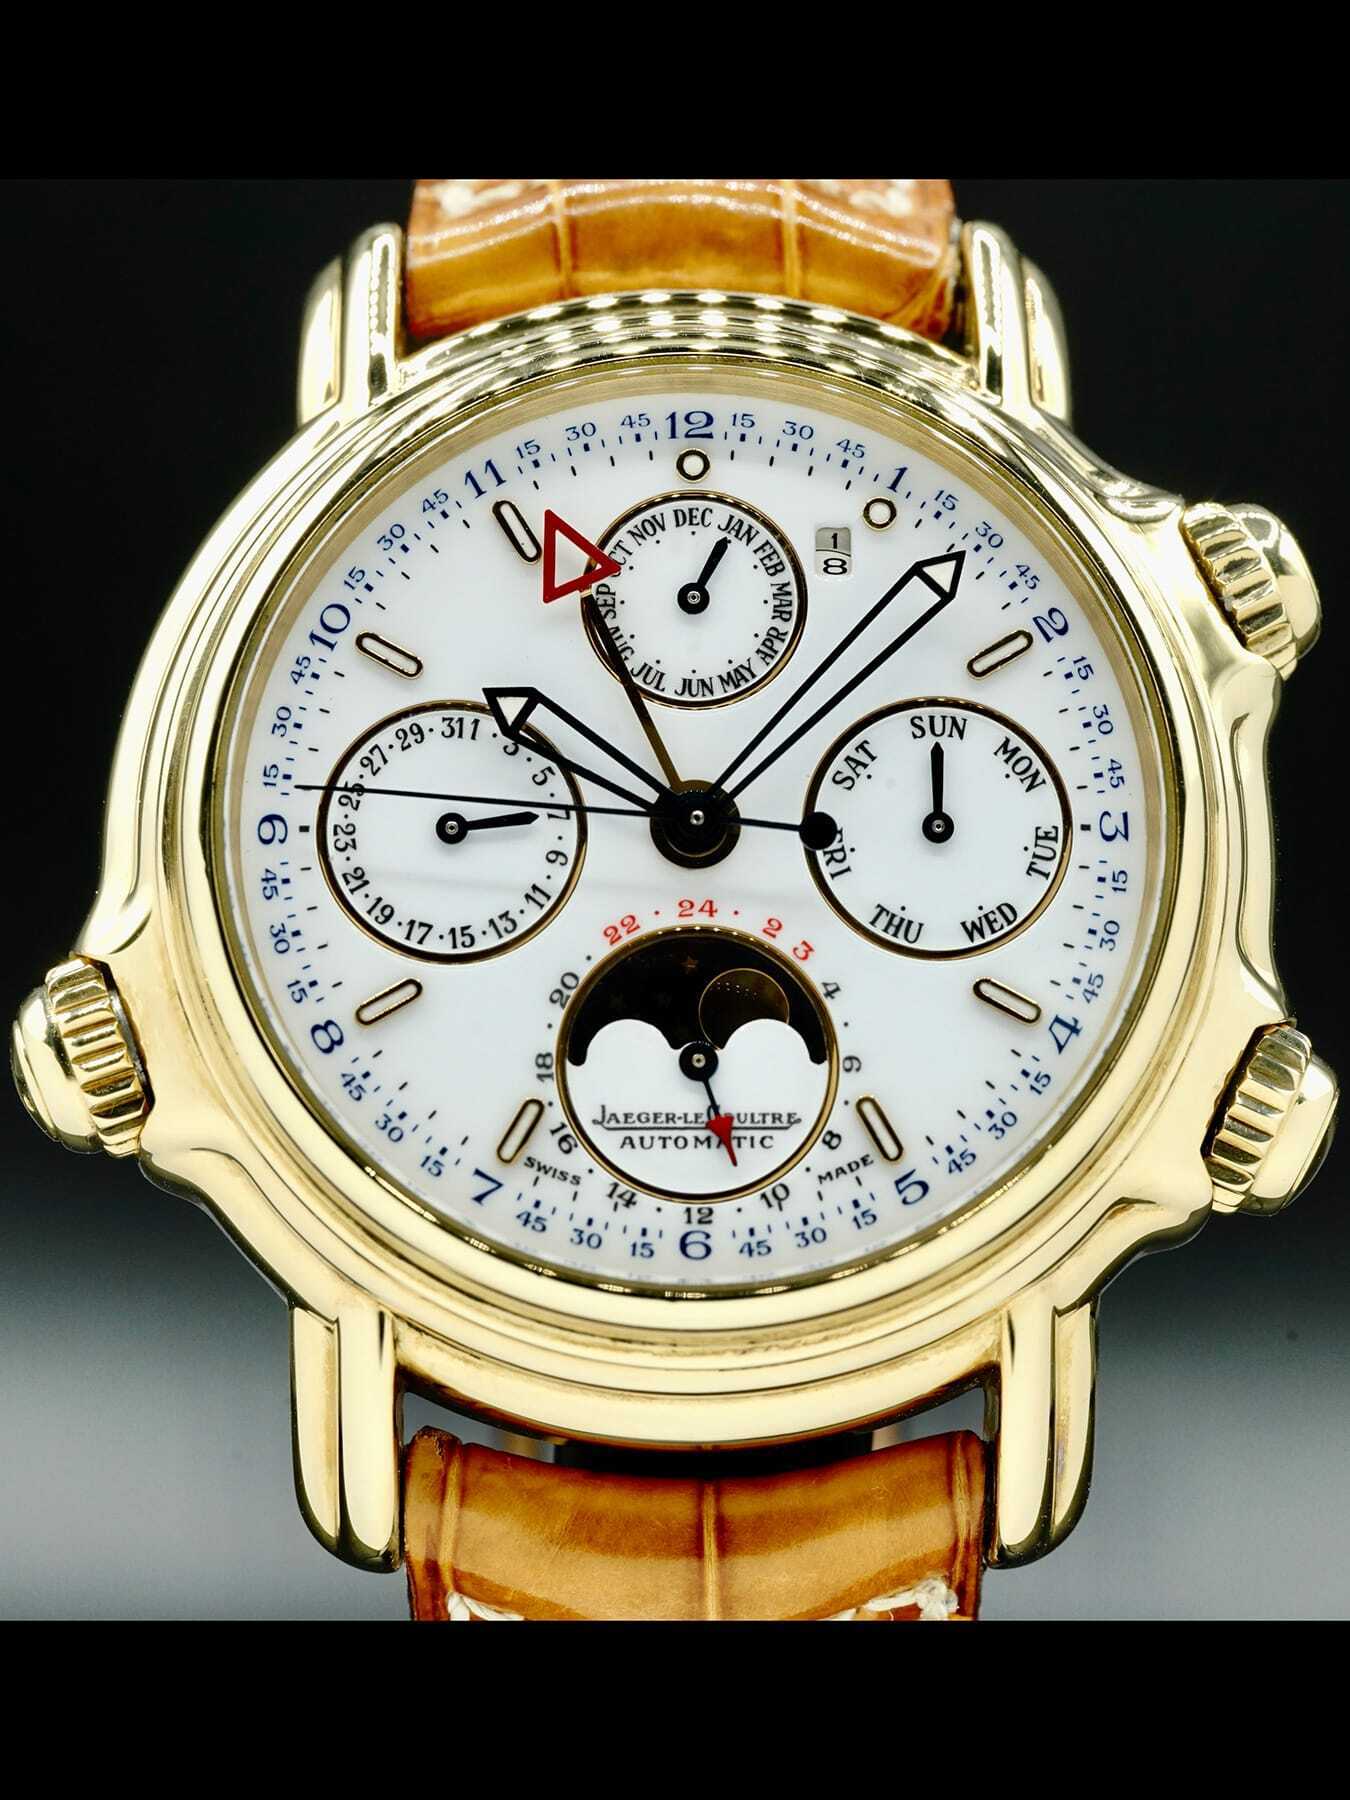 Jaeger-LeCoultre Grand Reveil 180.140.990 - Exquisite Timepieces